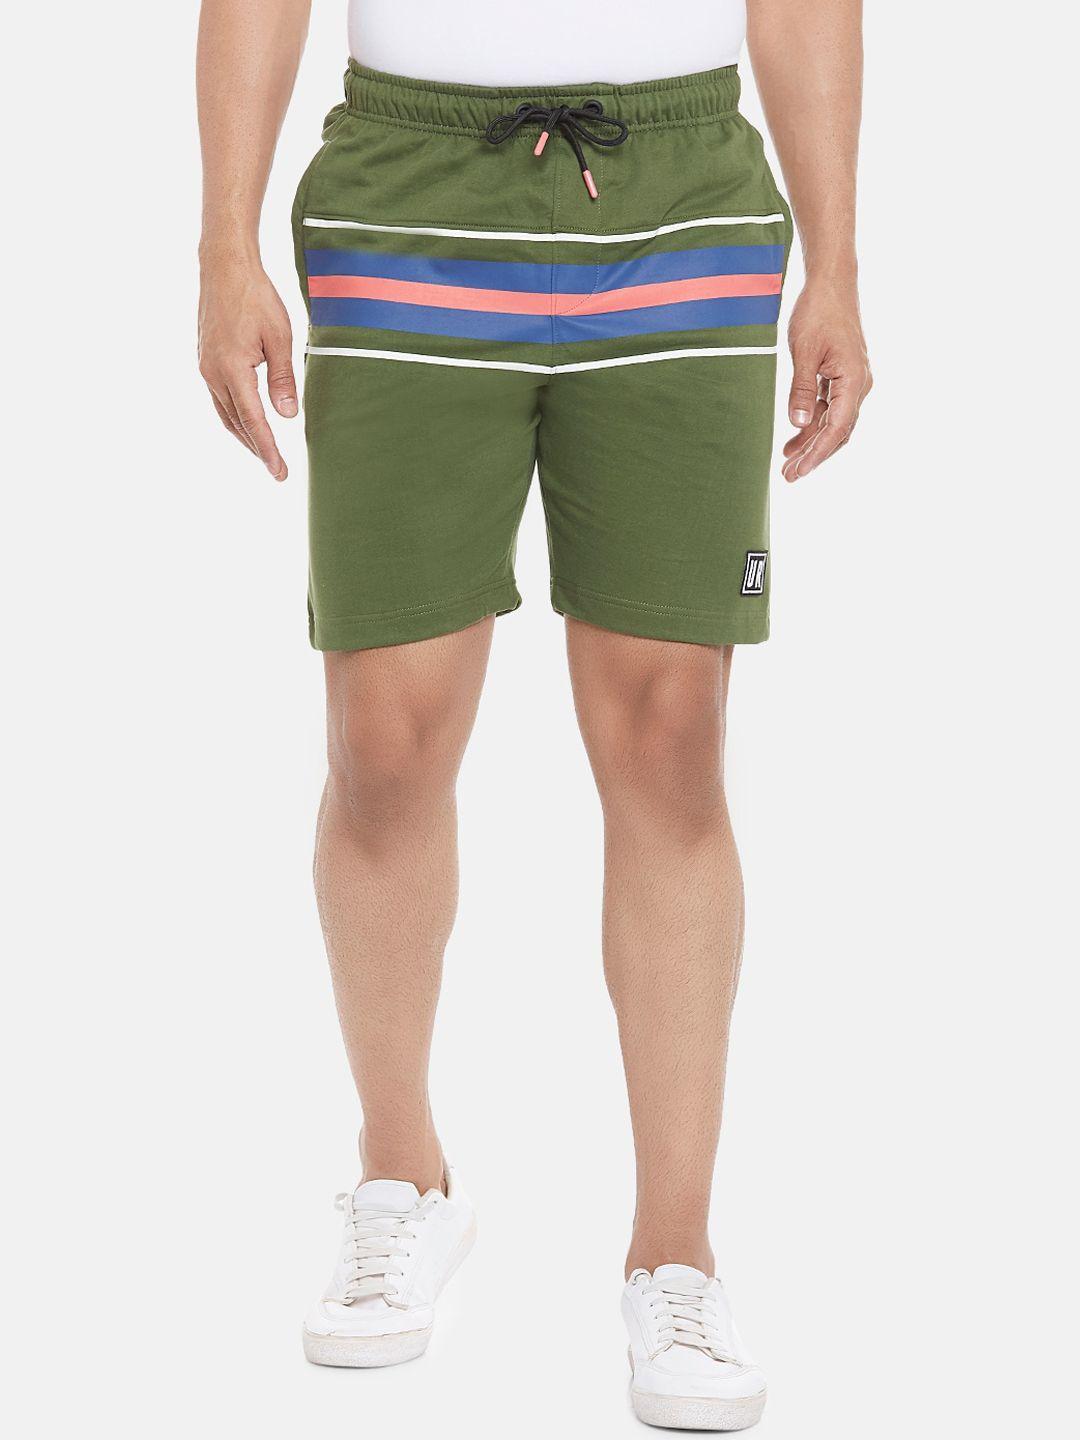 urban-ranger-by-pantaloons-men-olive-green-striped-slim-fit-mid-rise-regular-shorts